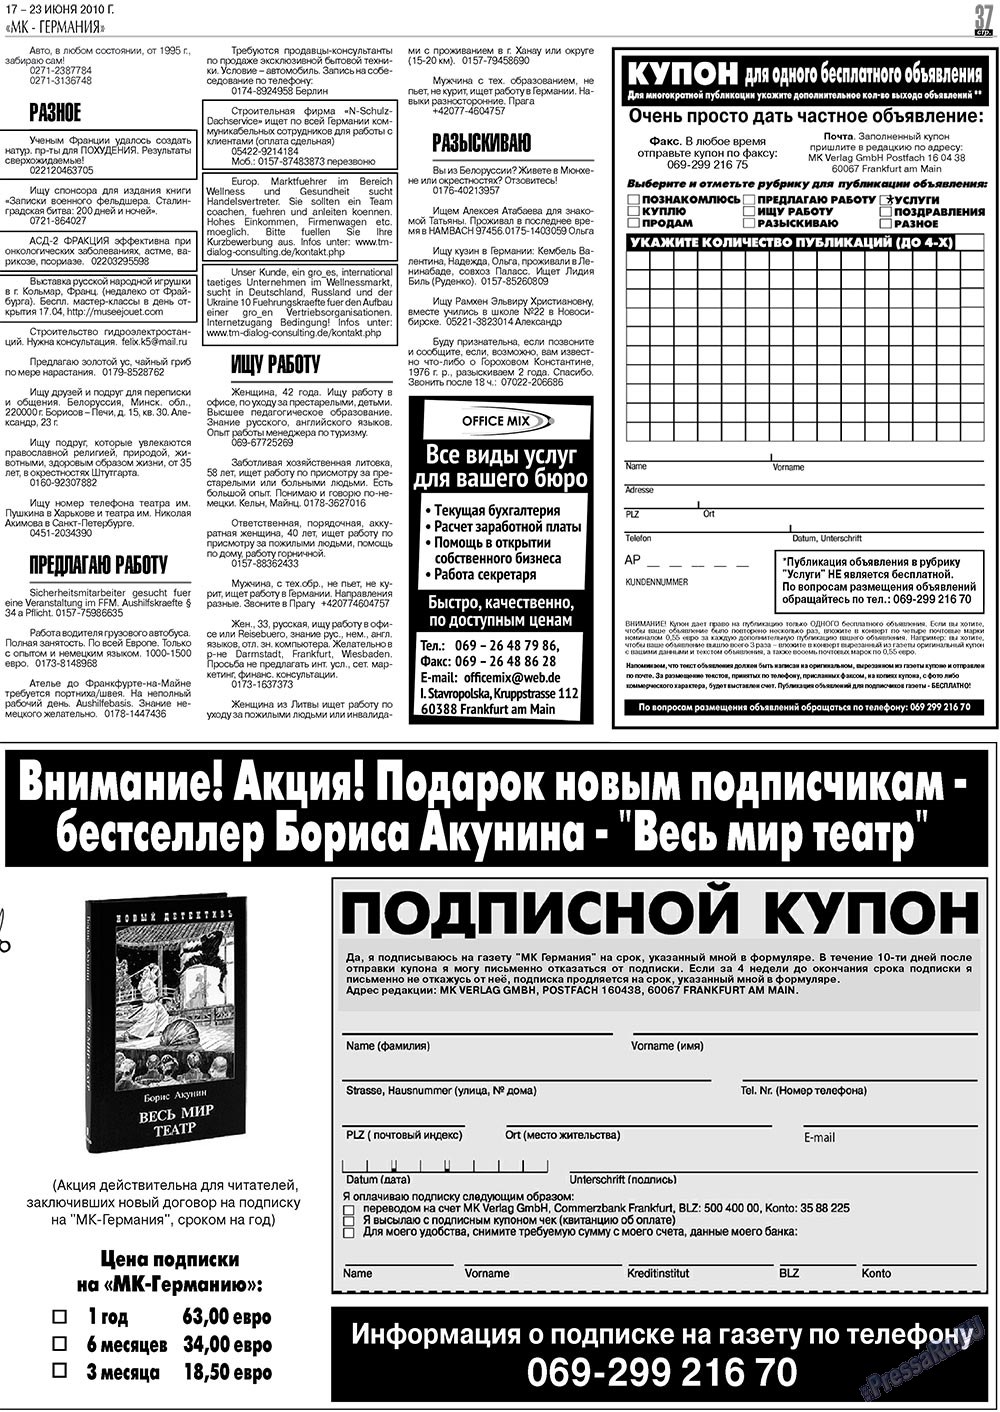 МК-Германия, газета. 2010 №25 стр.37